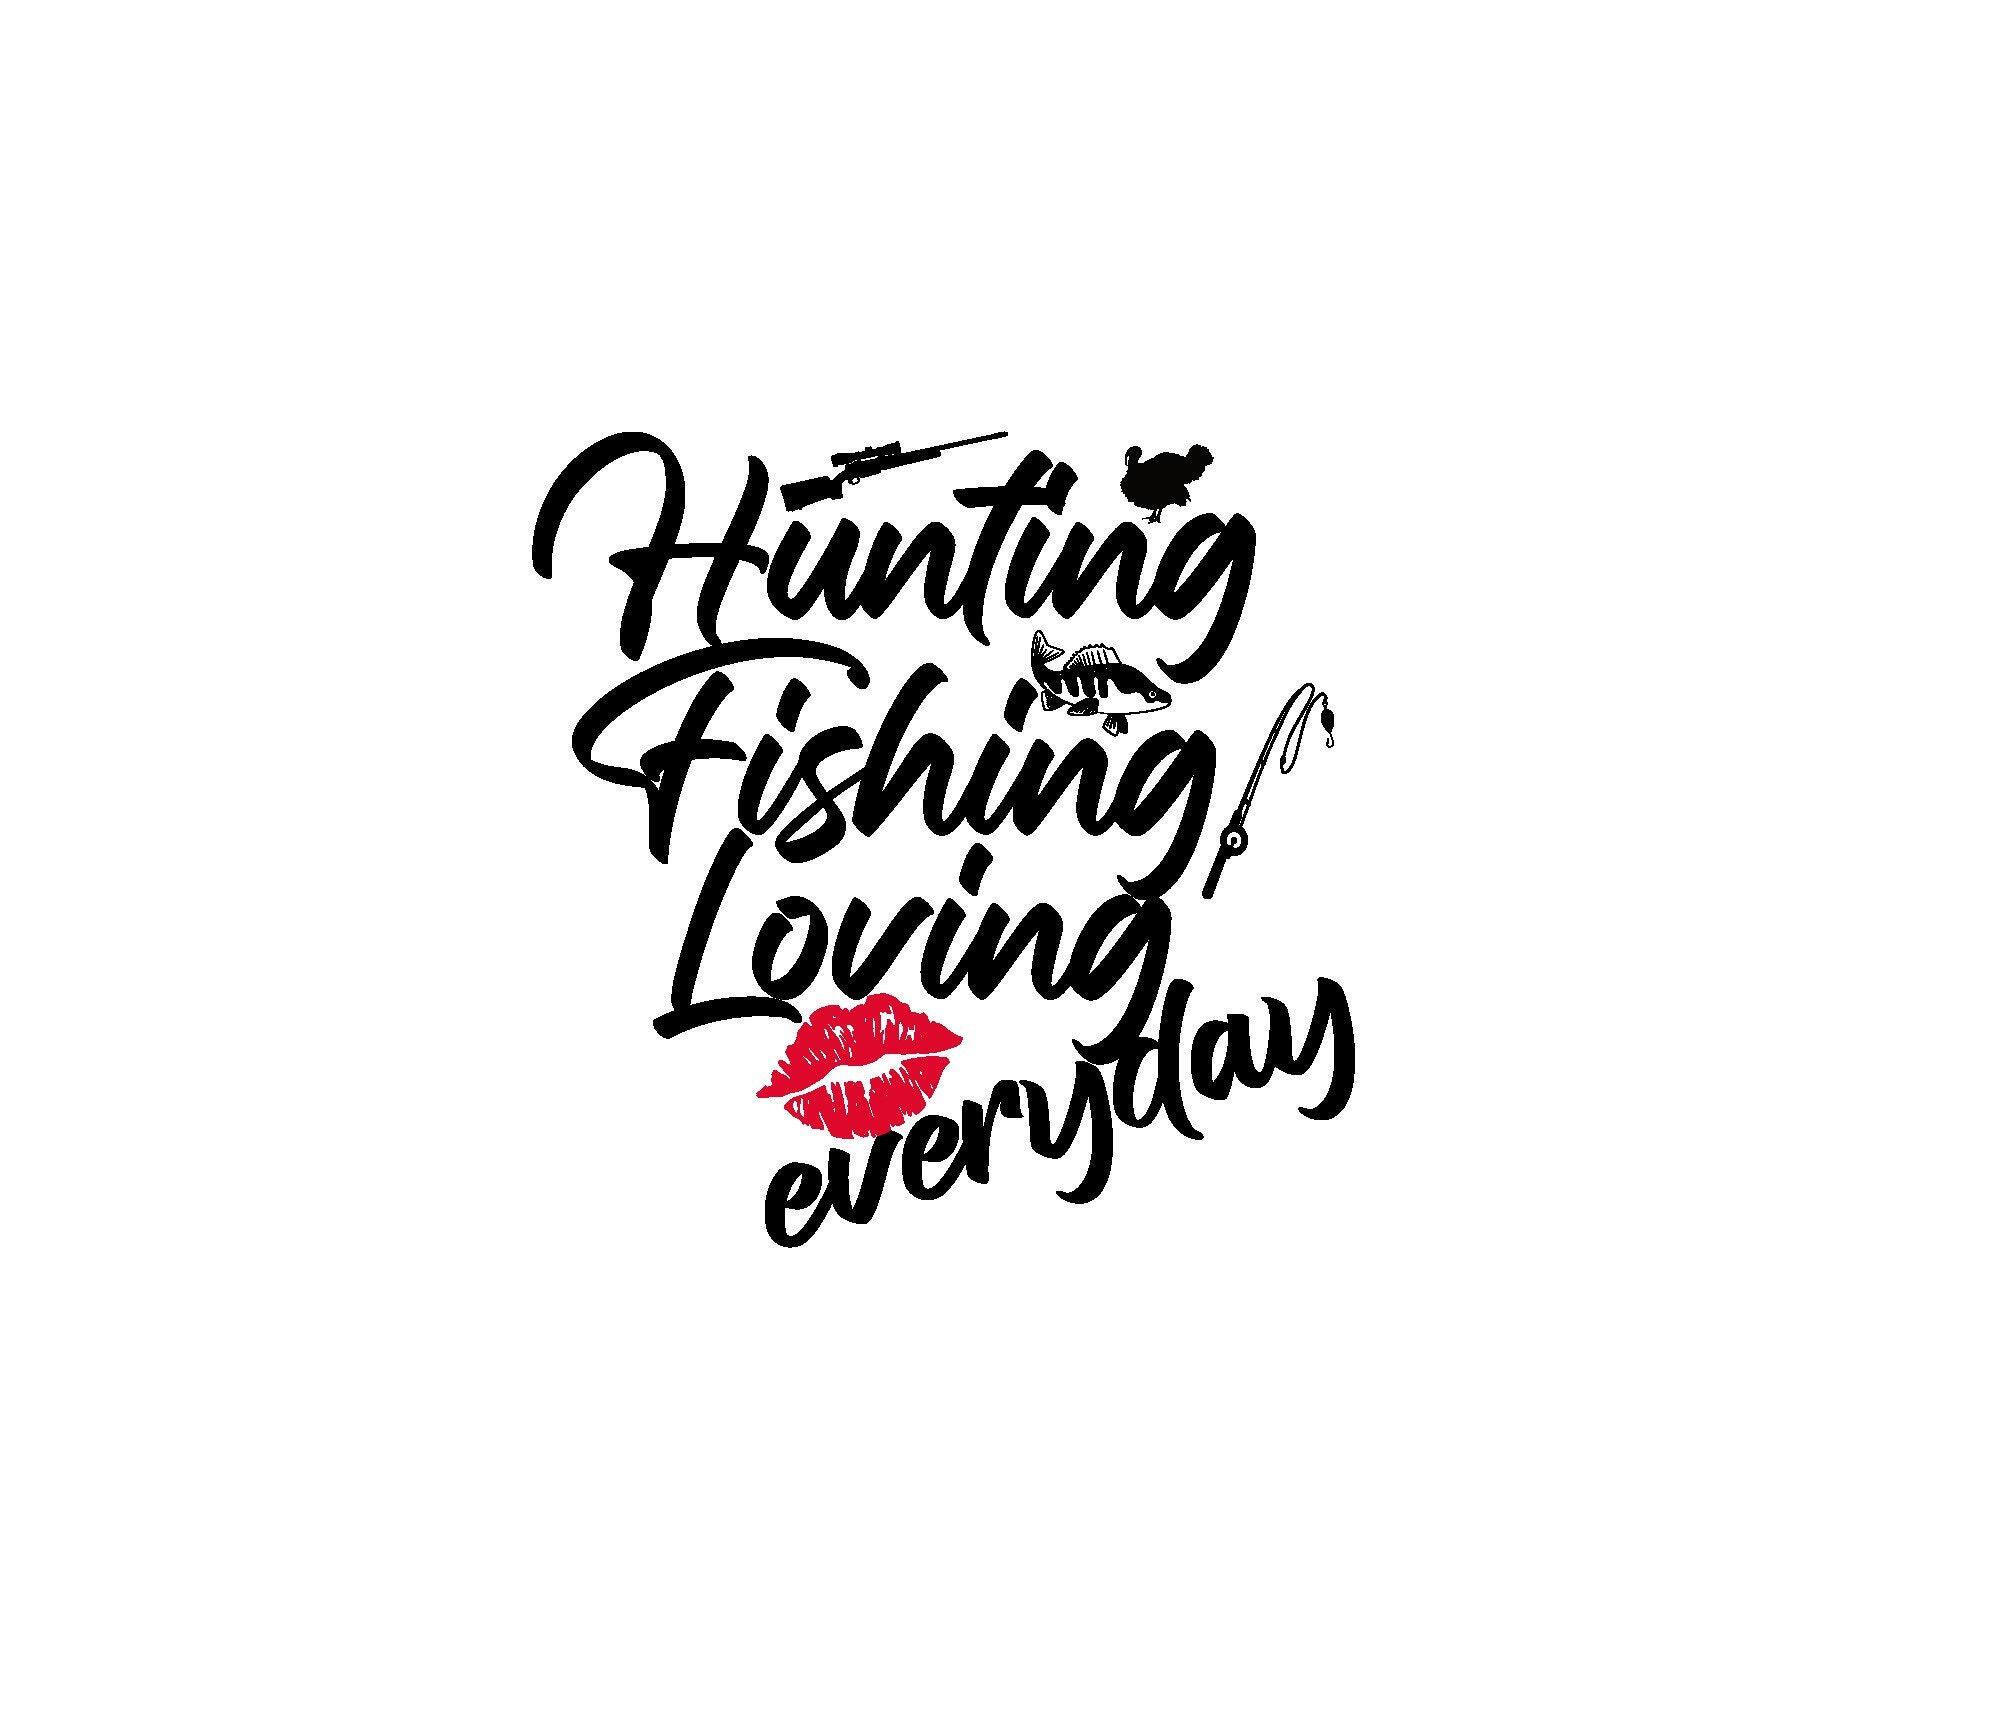 Hunting Fishing Loving Everyday, Country Music, Lyrics